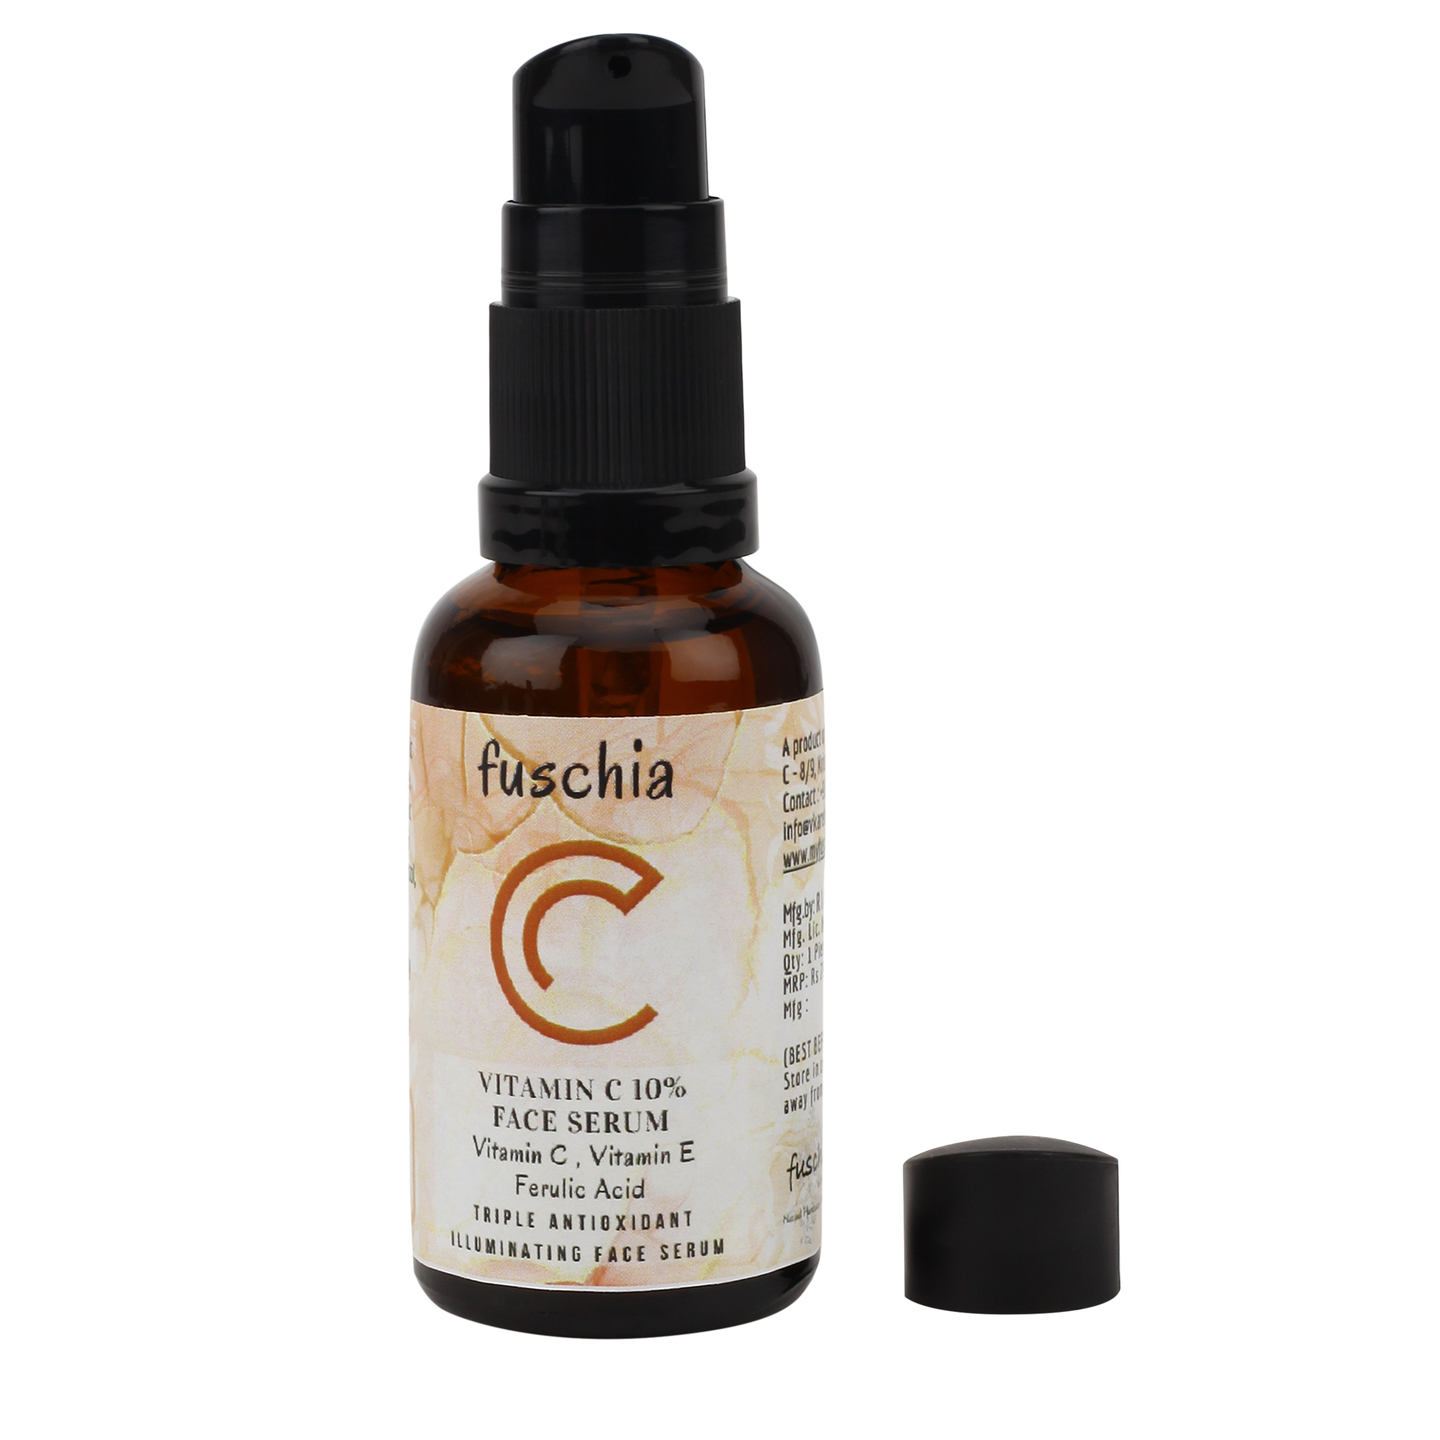 Fuschia Triple Anti-Oxidant Illuminating Face Serum - Vit. C 10%